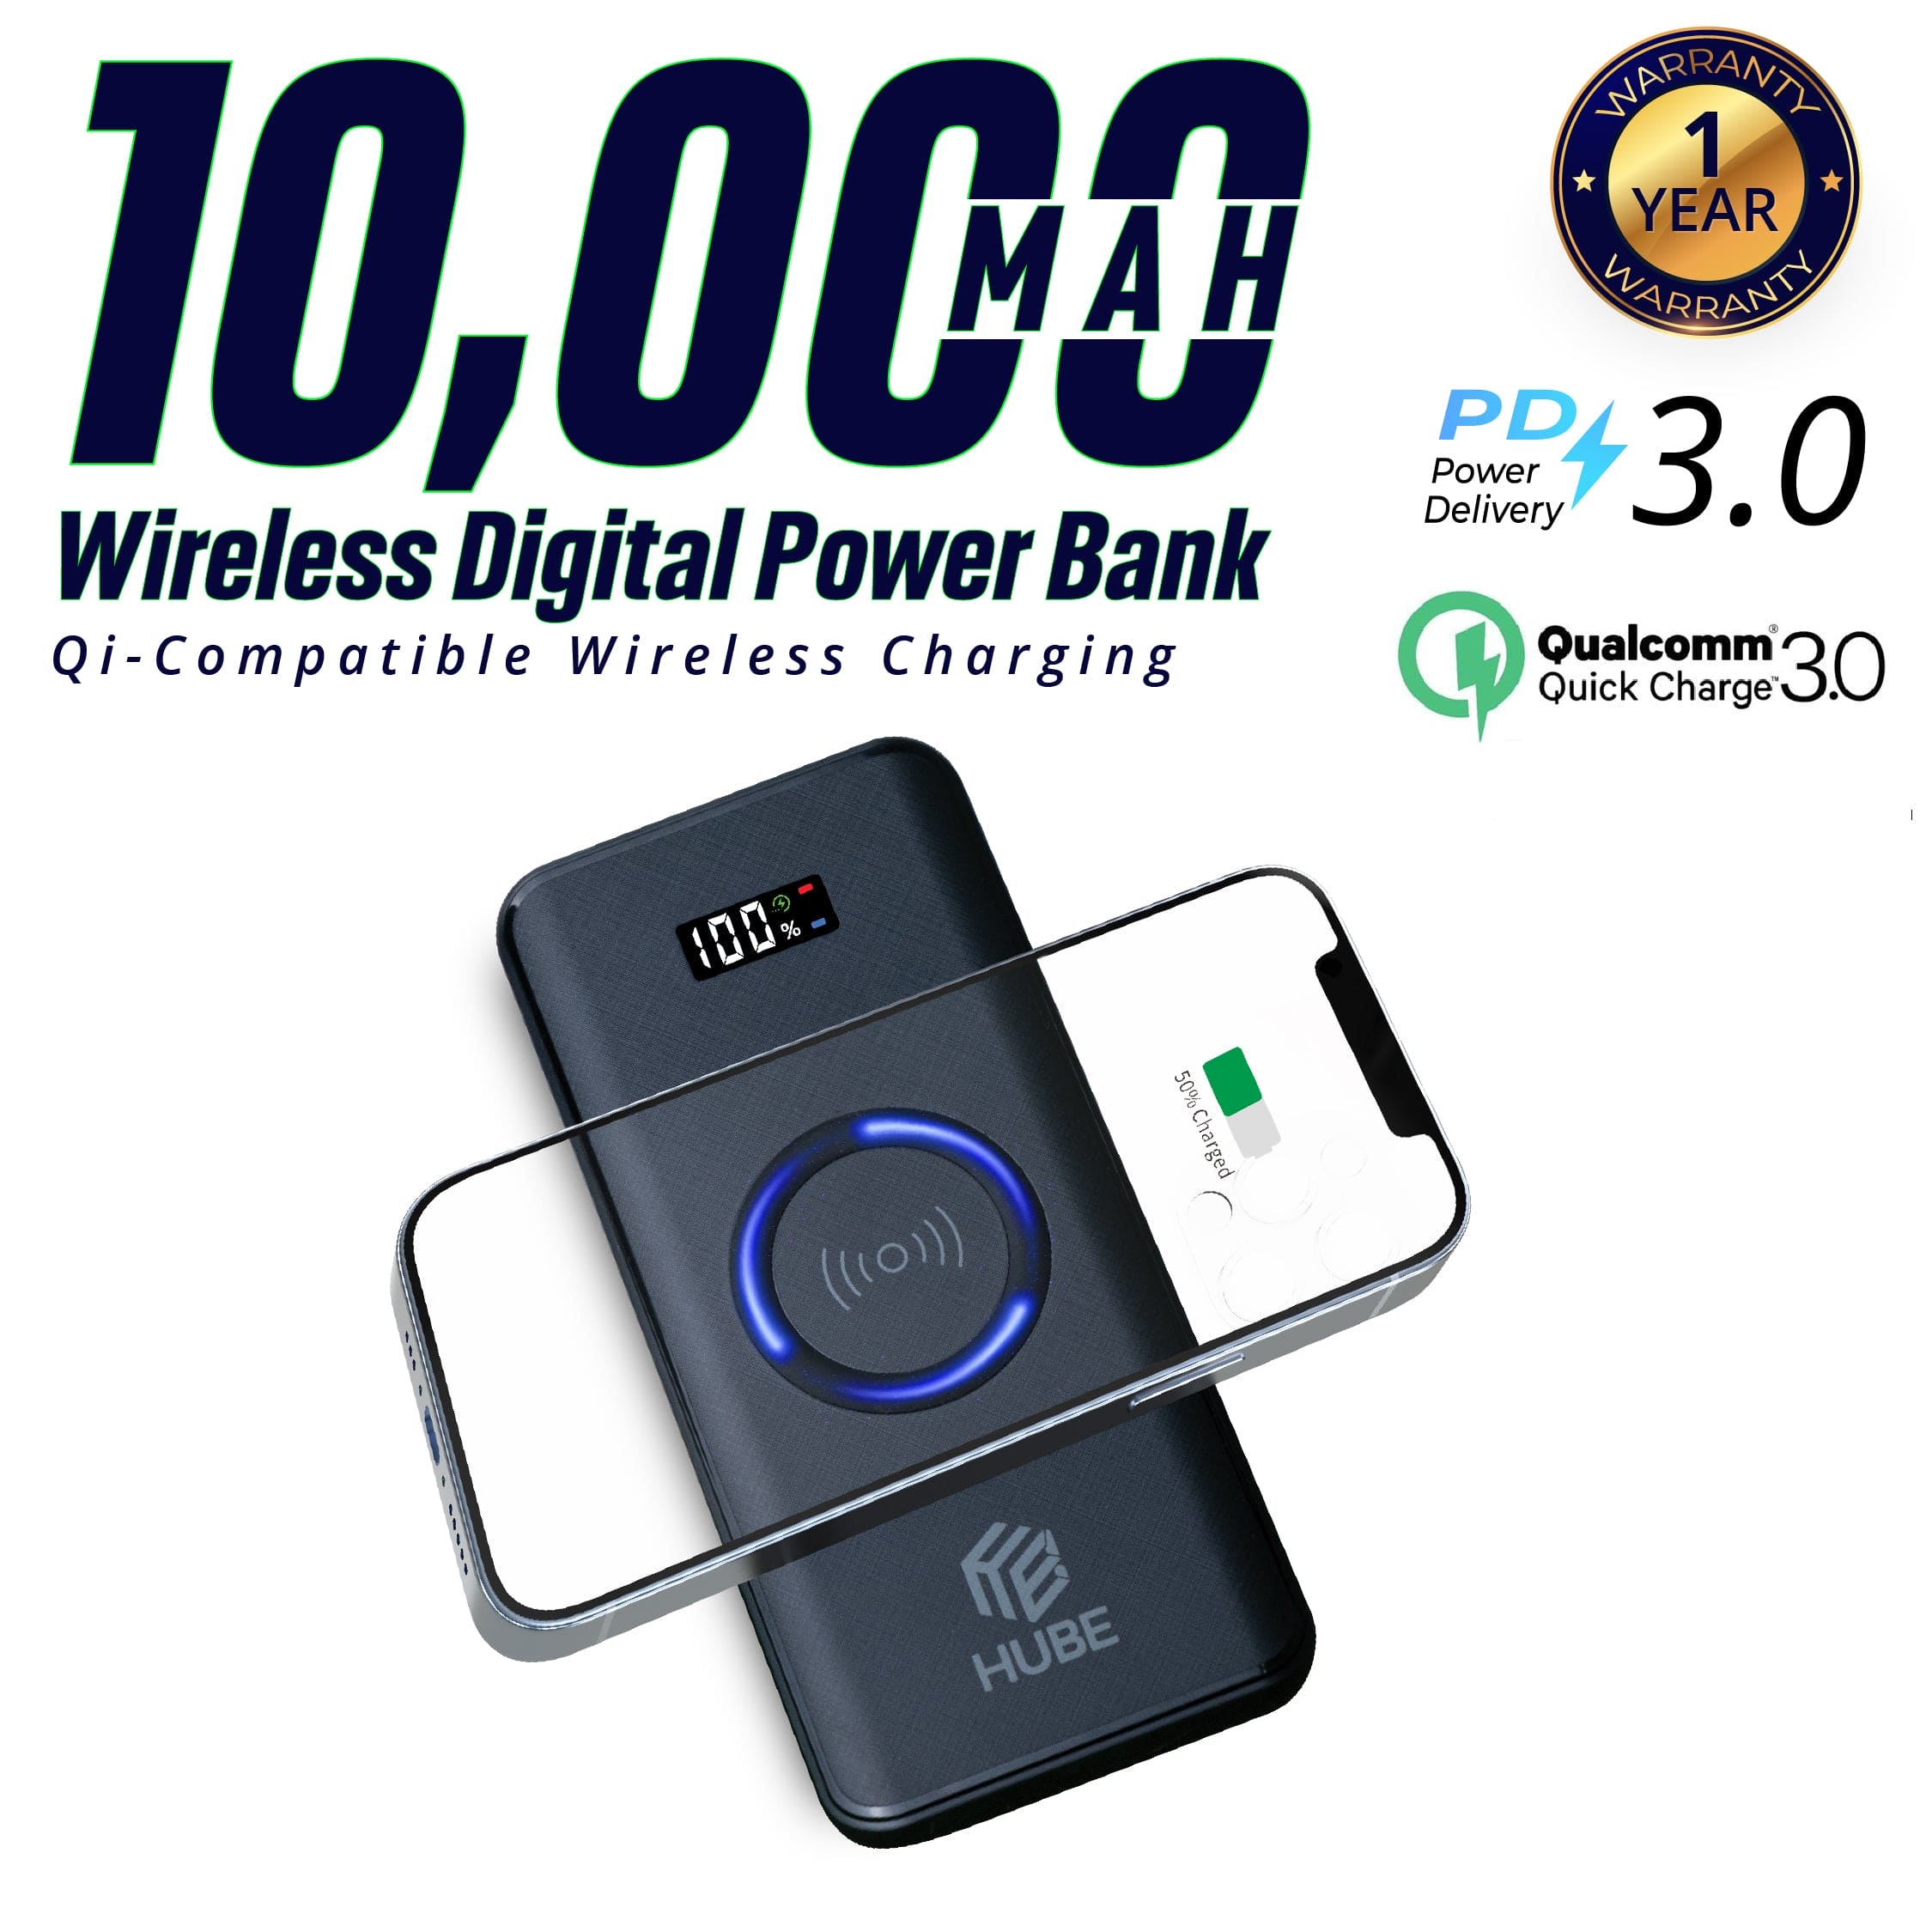 Vakman spreken interview Wireless Charging 10,000 mAh Fast Charging Power Bank – Hube (Pvt.) Ltd